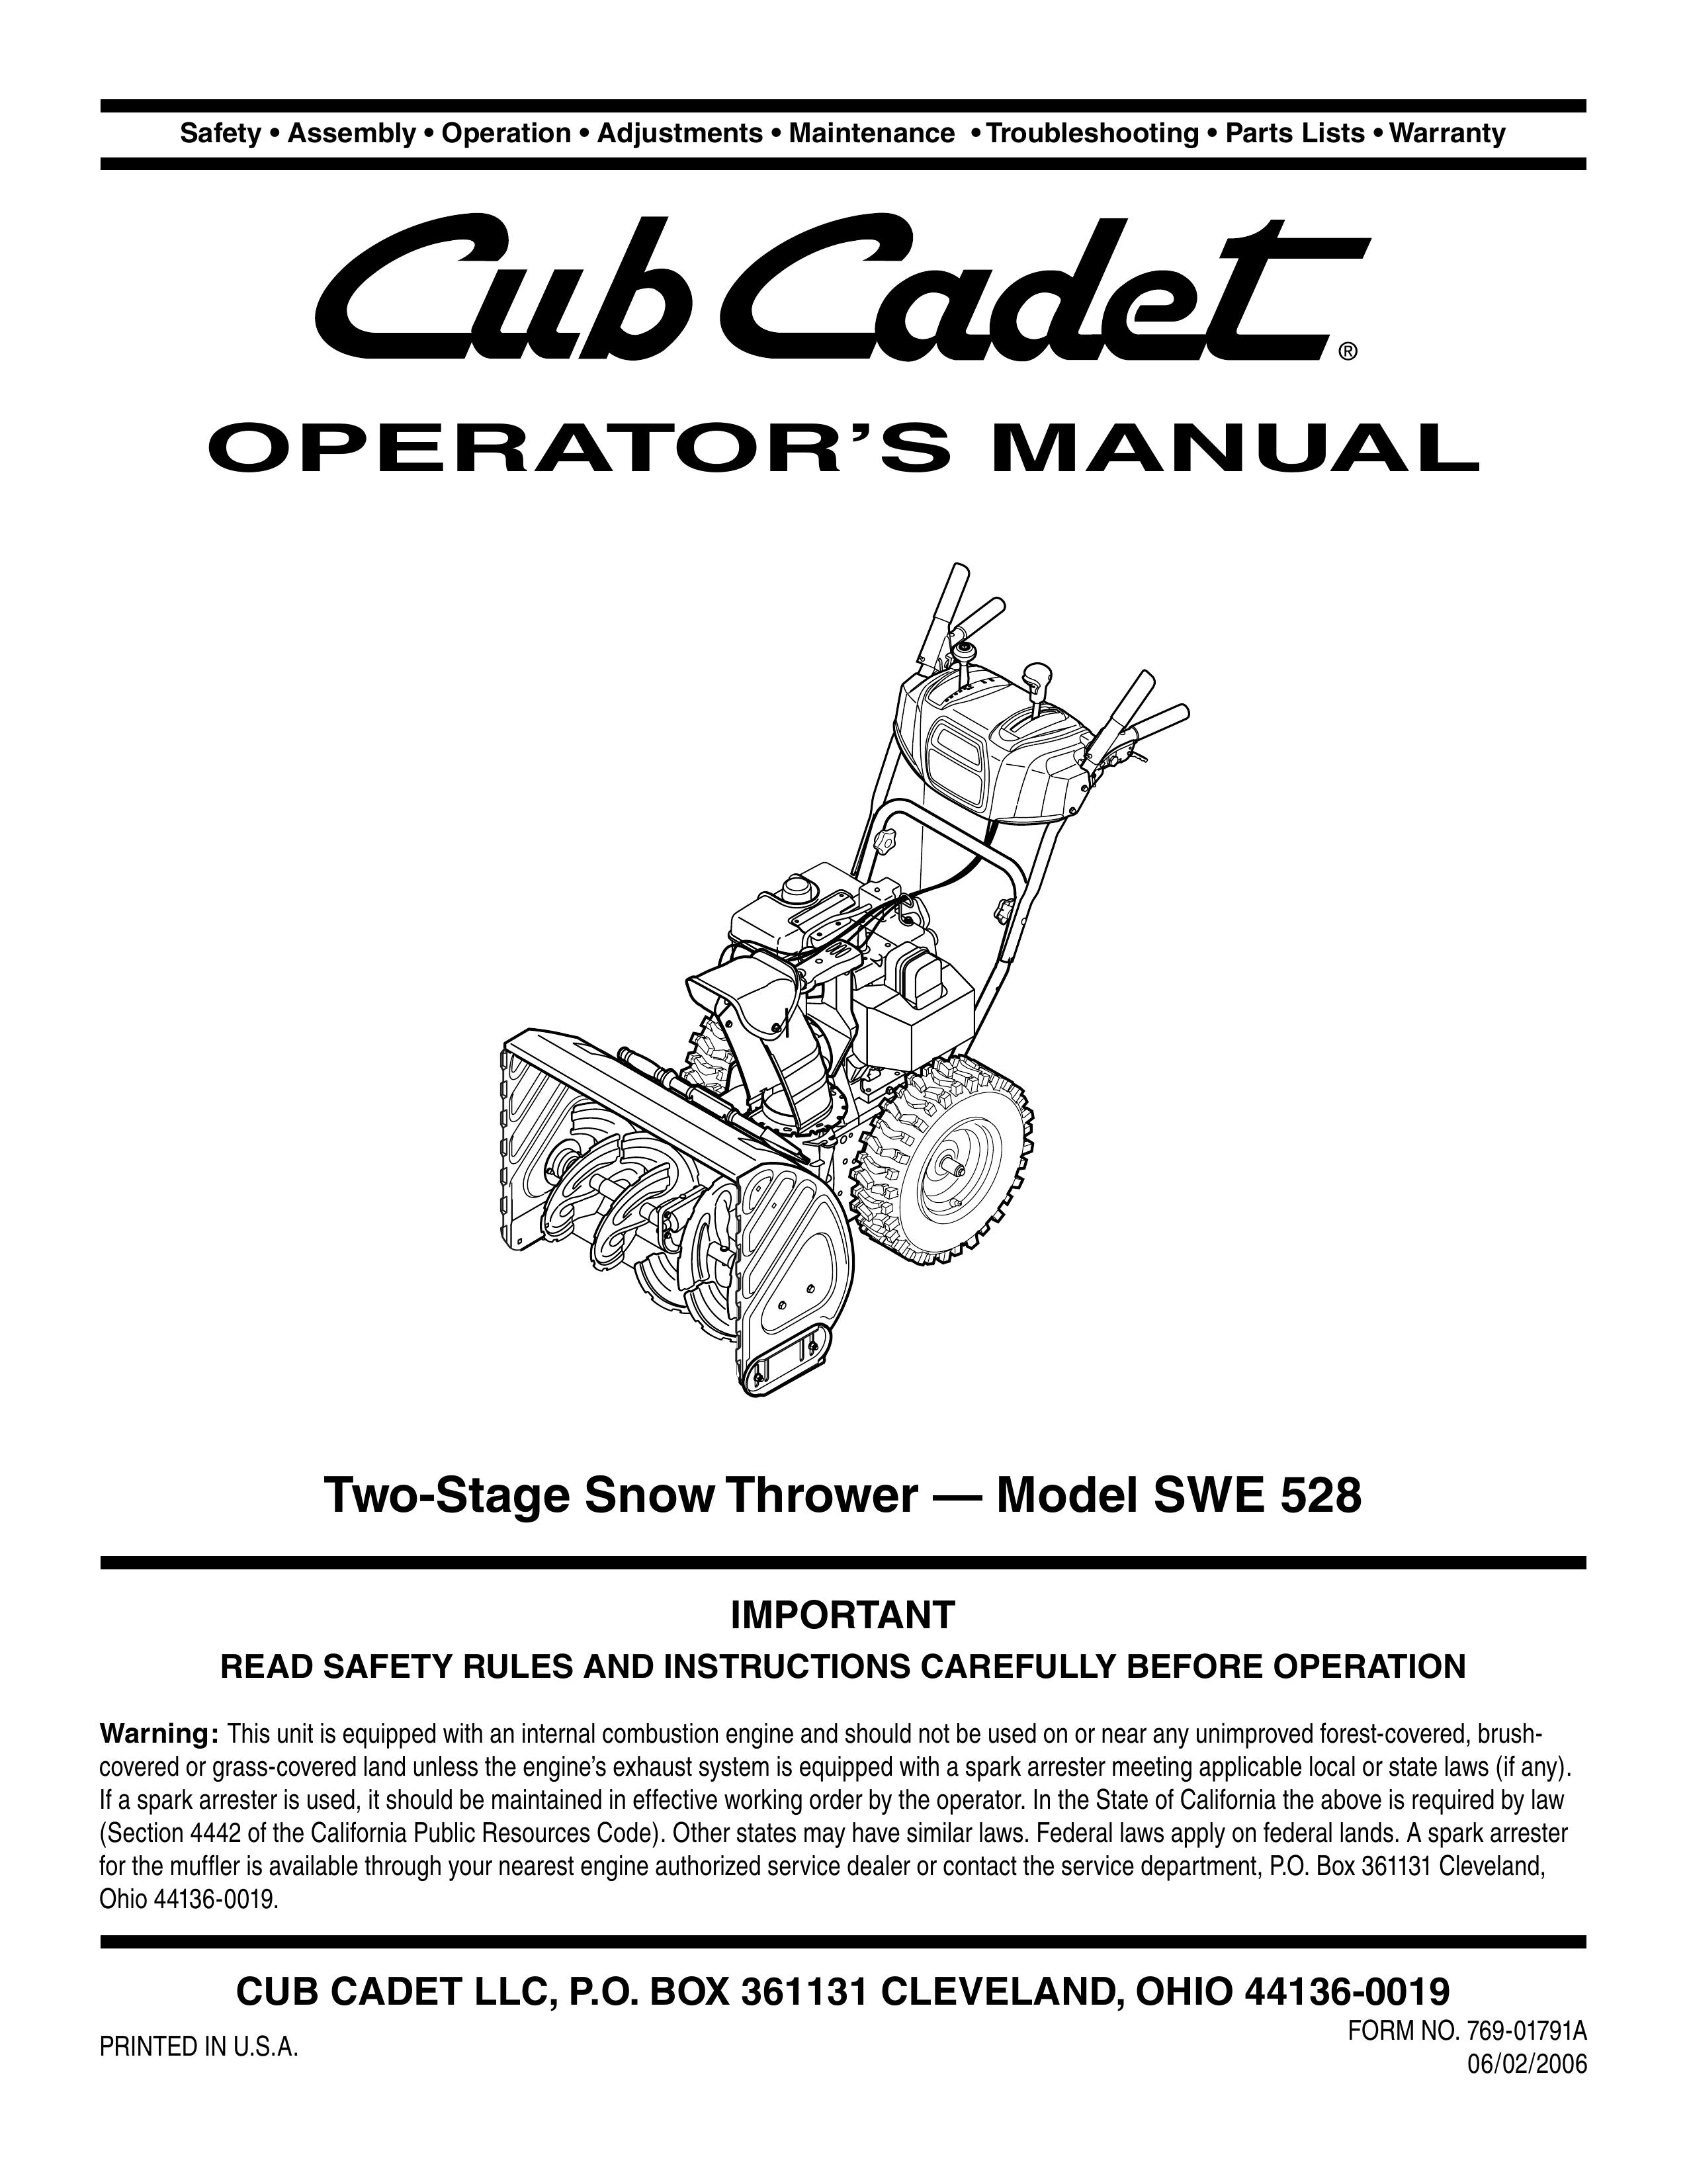 Cub Cadet SWE 528 Snow Blower User Manual